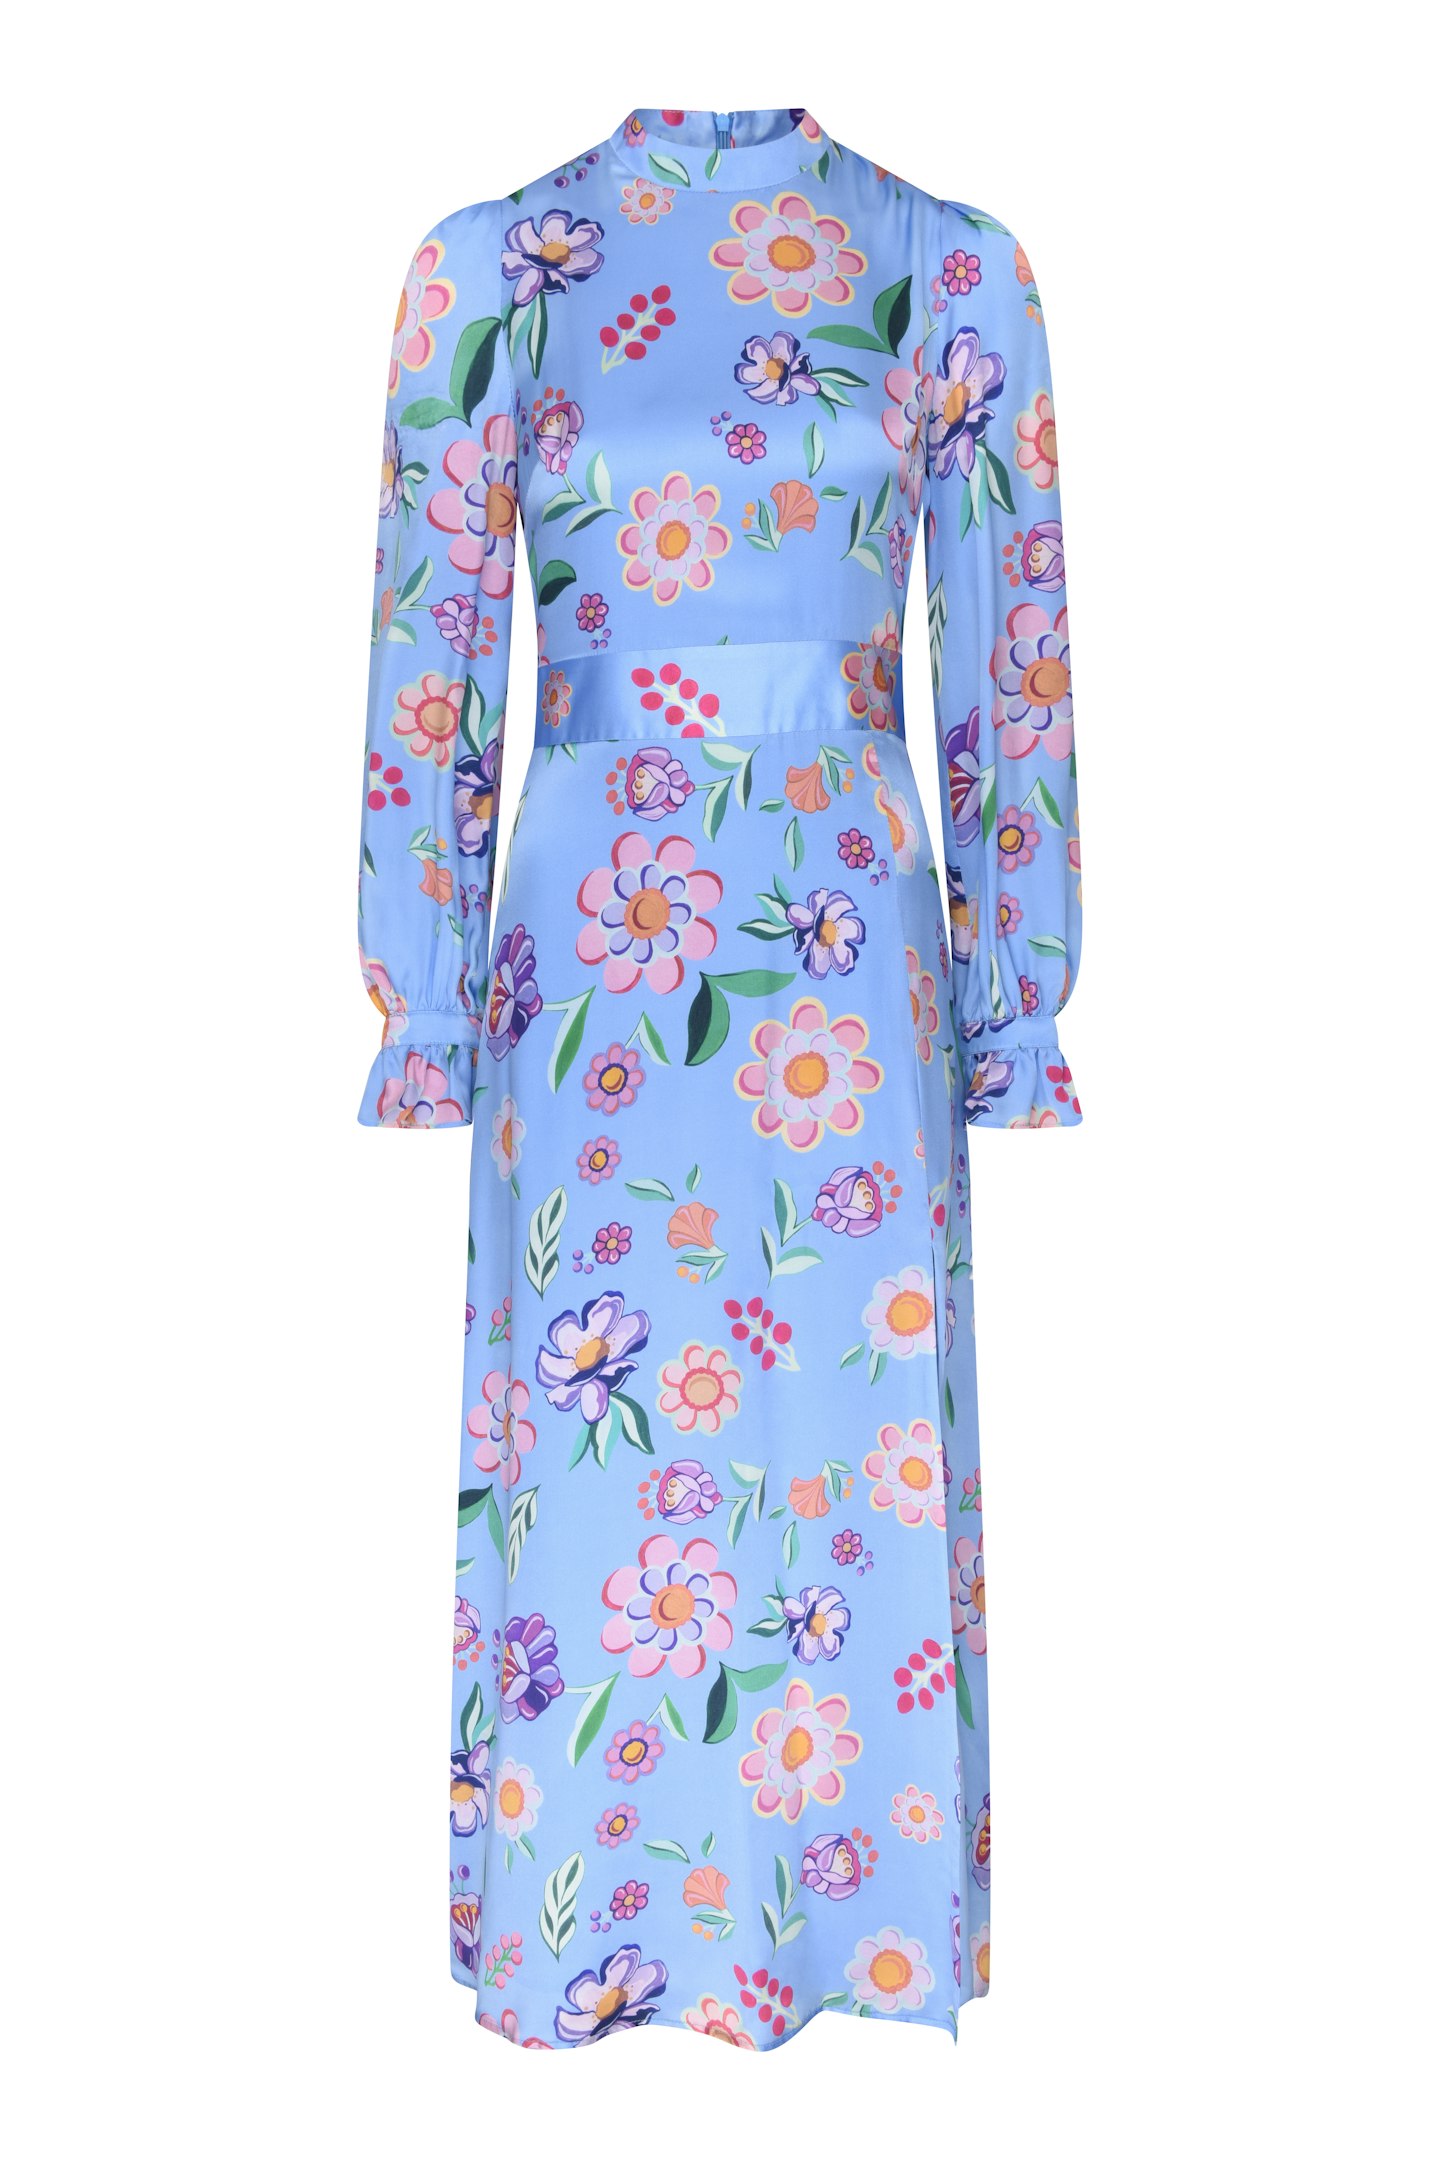 Floral Silk Dress, £420